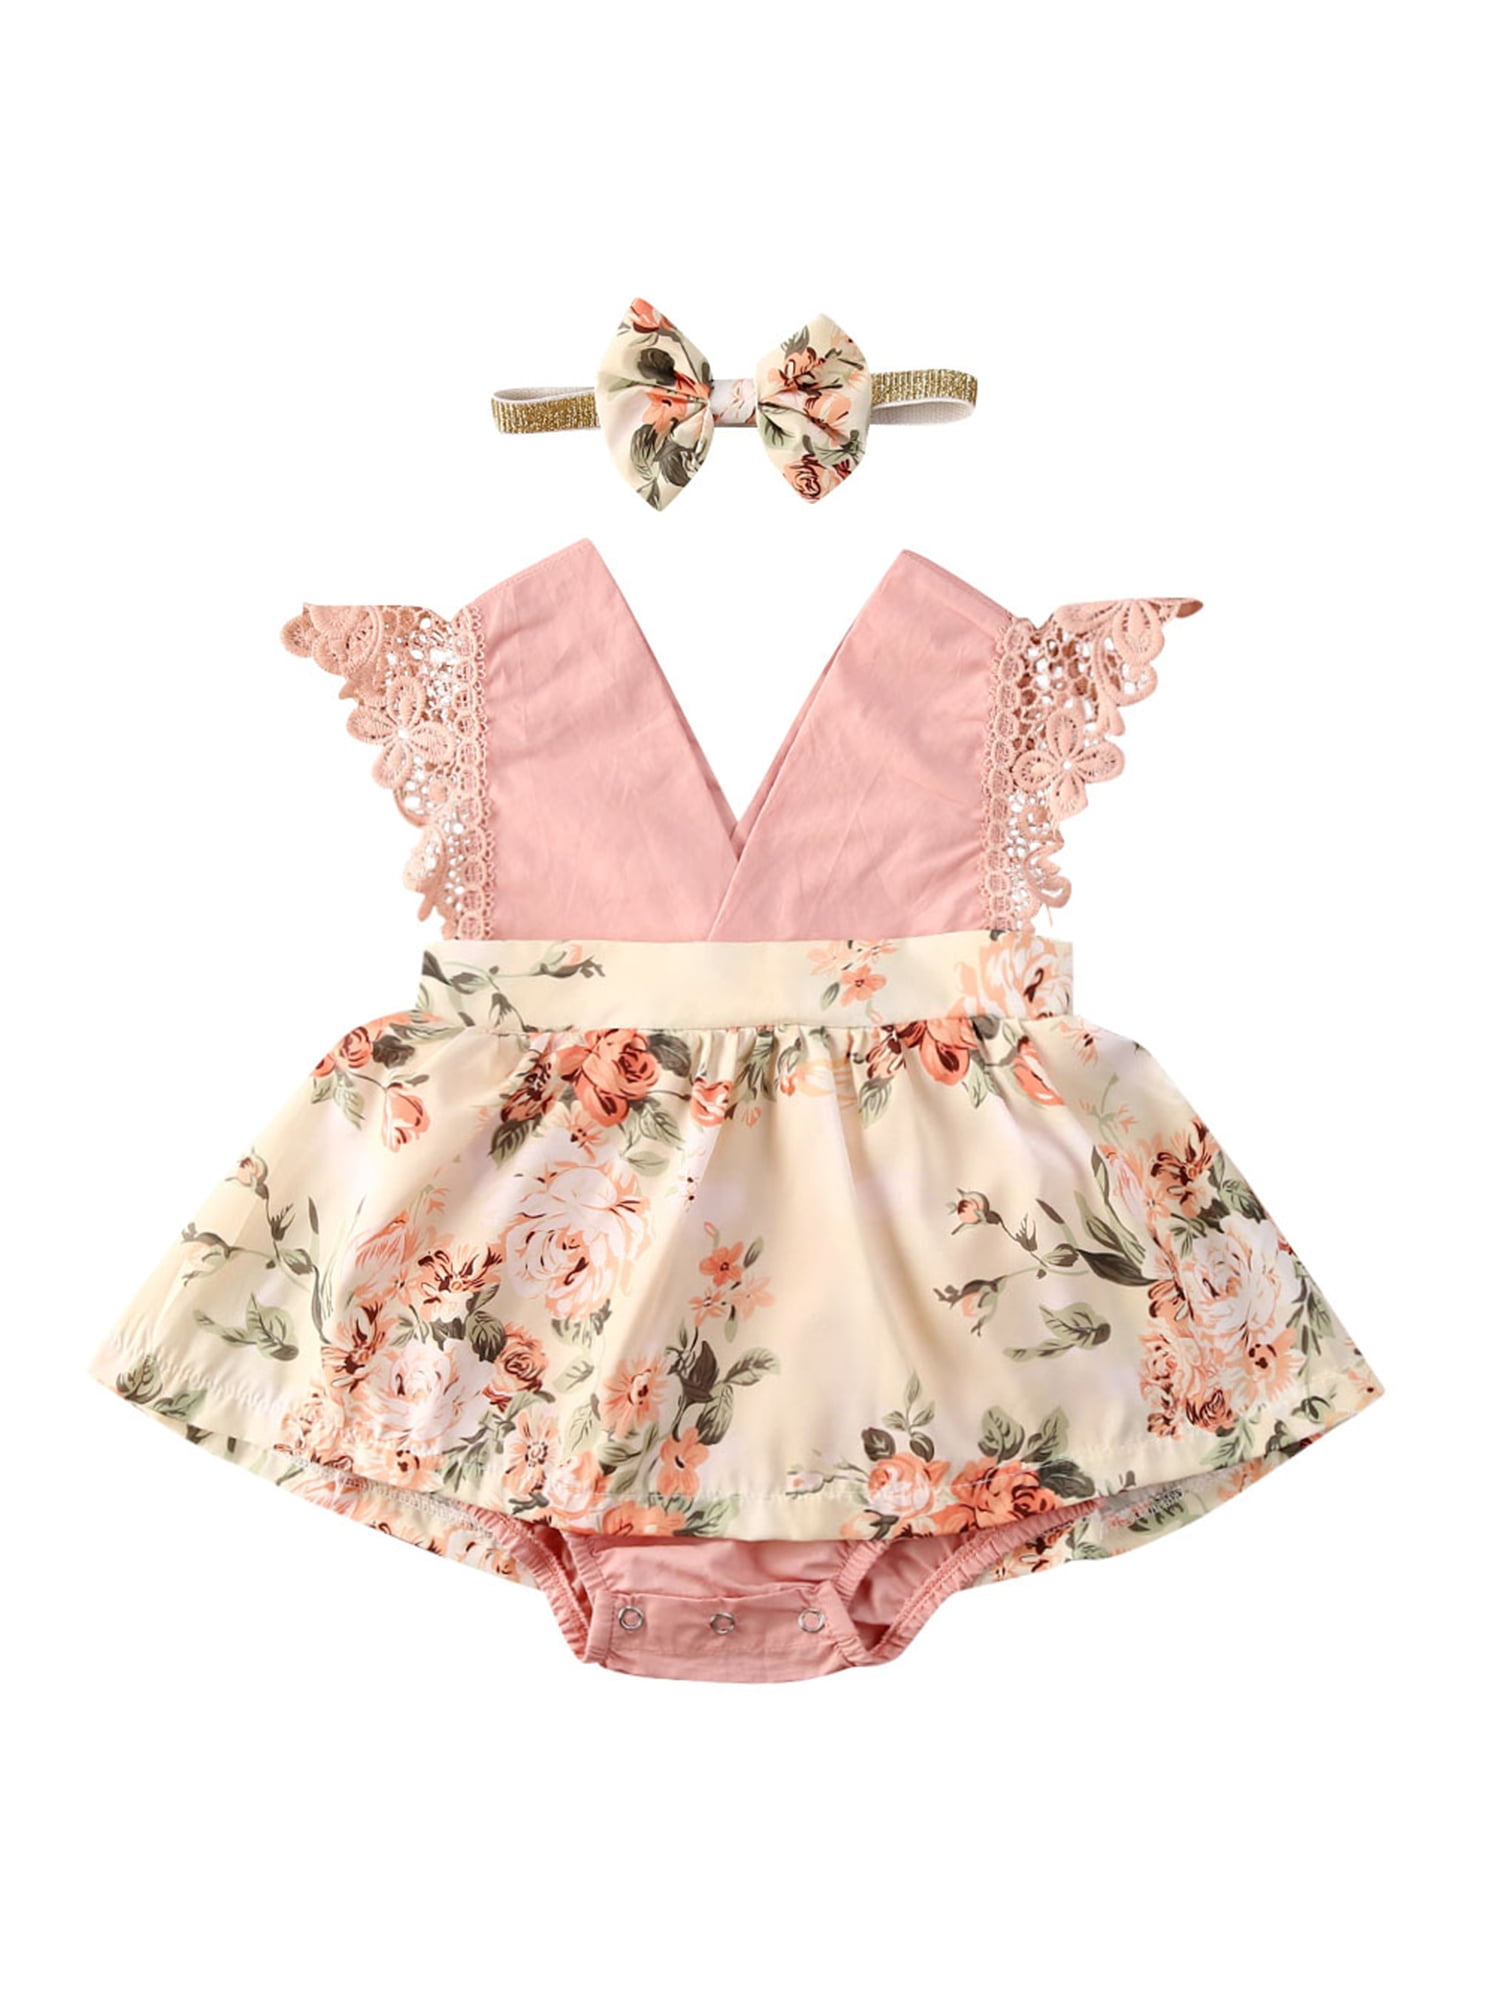 Infant Baby Girls Sleeveless Floral Lace Backless Romper Bodysuit Dress+Headband 